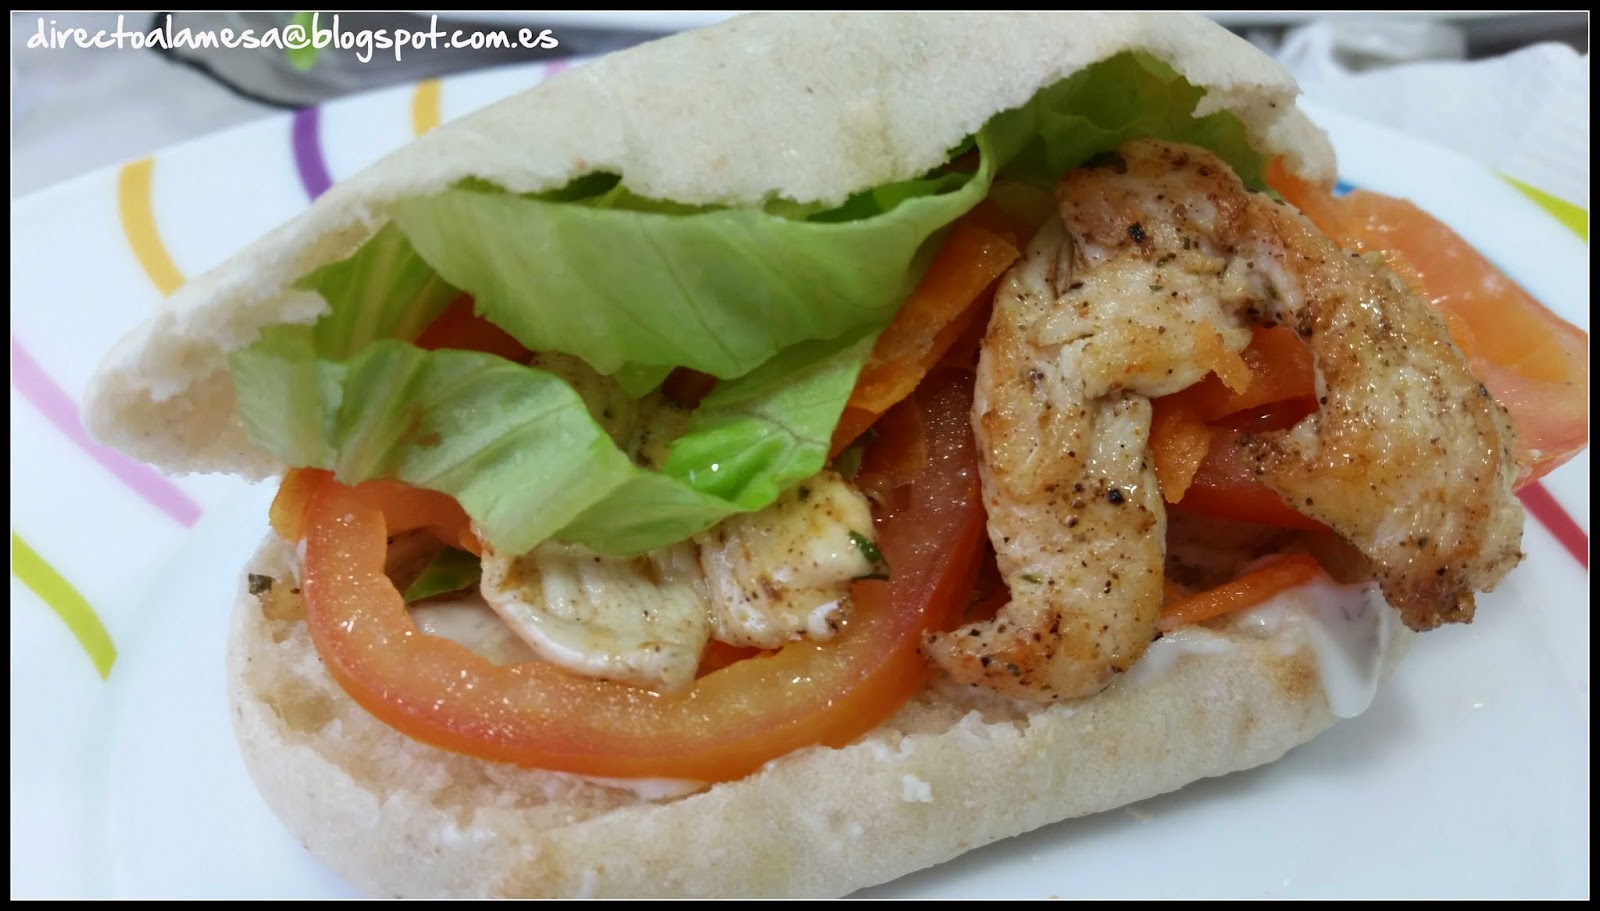 http://directoalamesa.blogspot.com.es/2015/04/kebab-casero-pan-de-pita-pollo.html